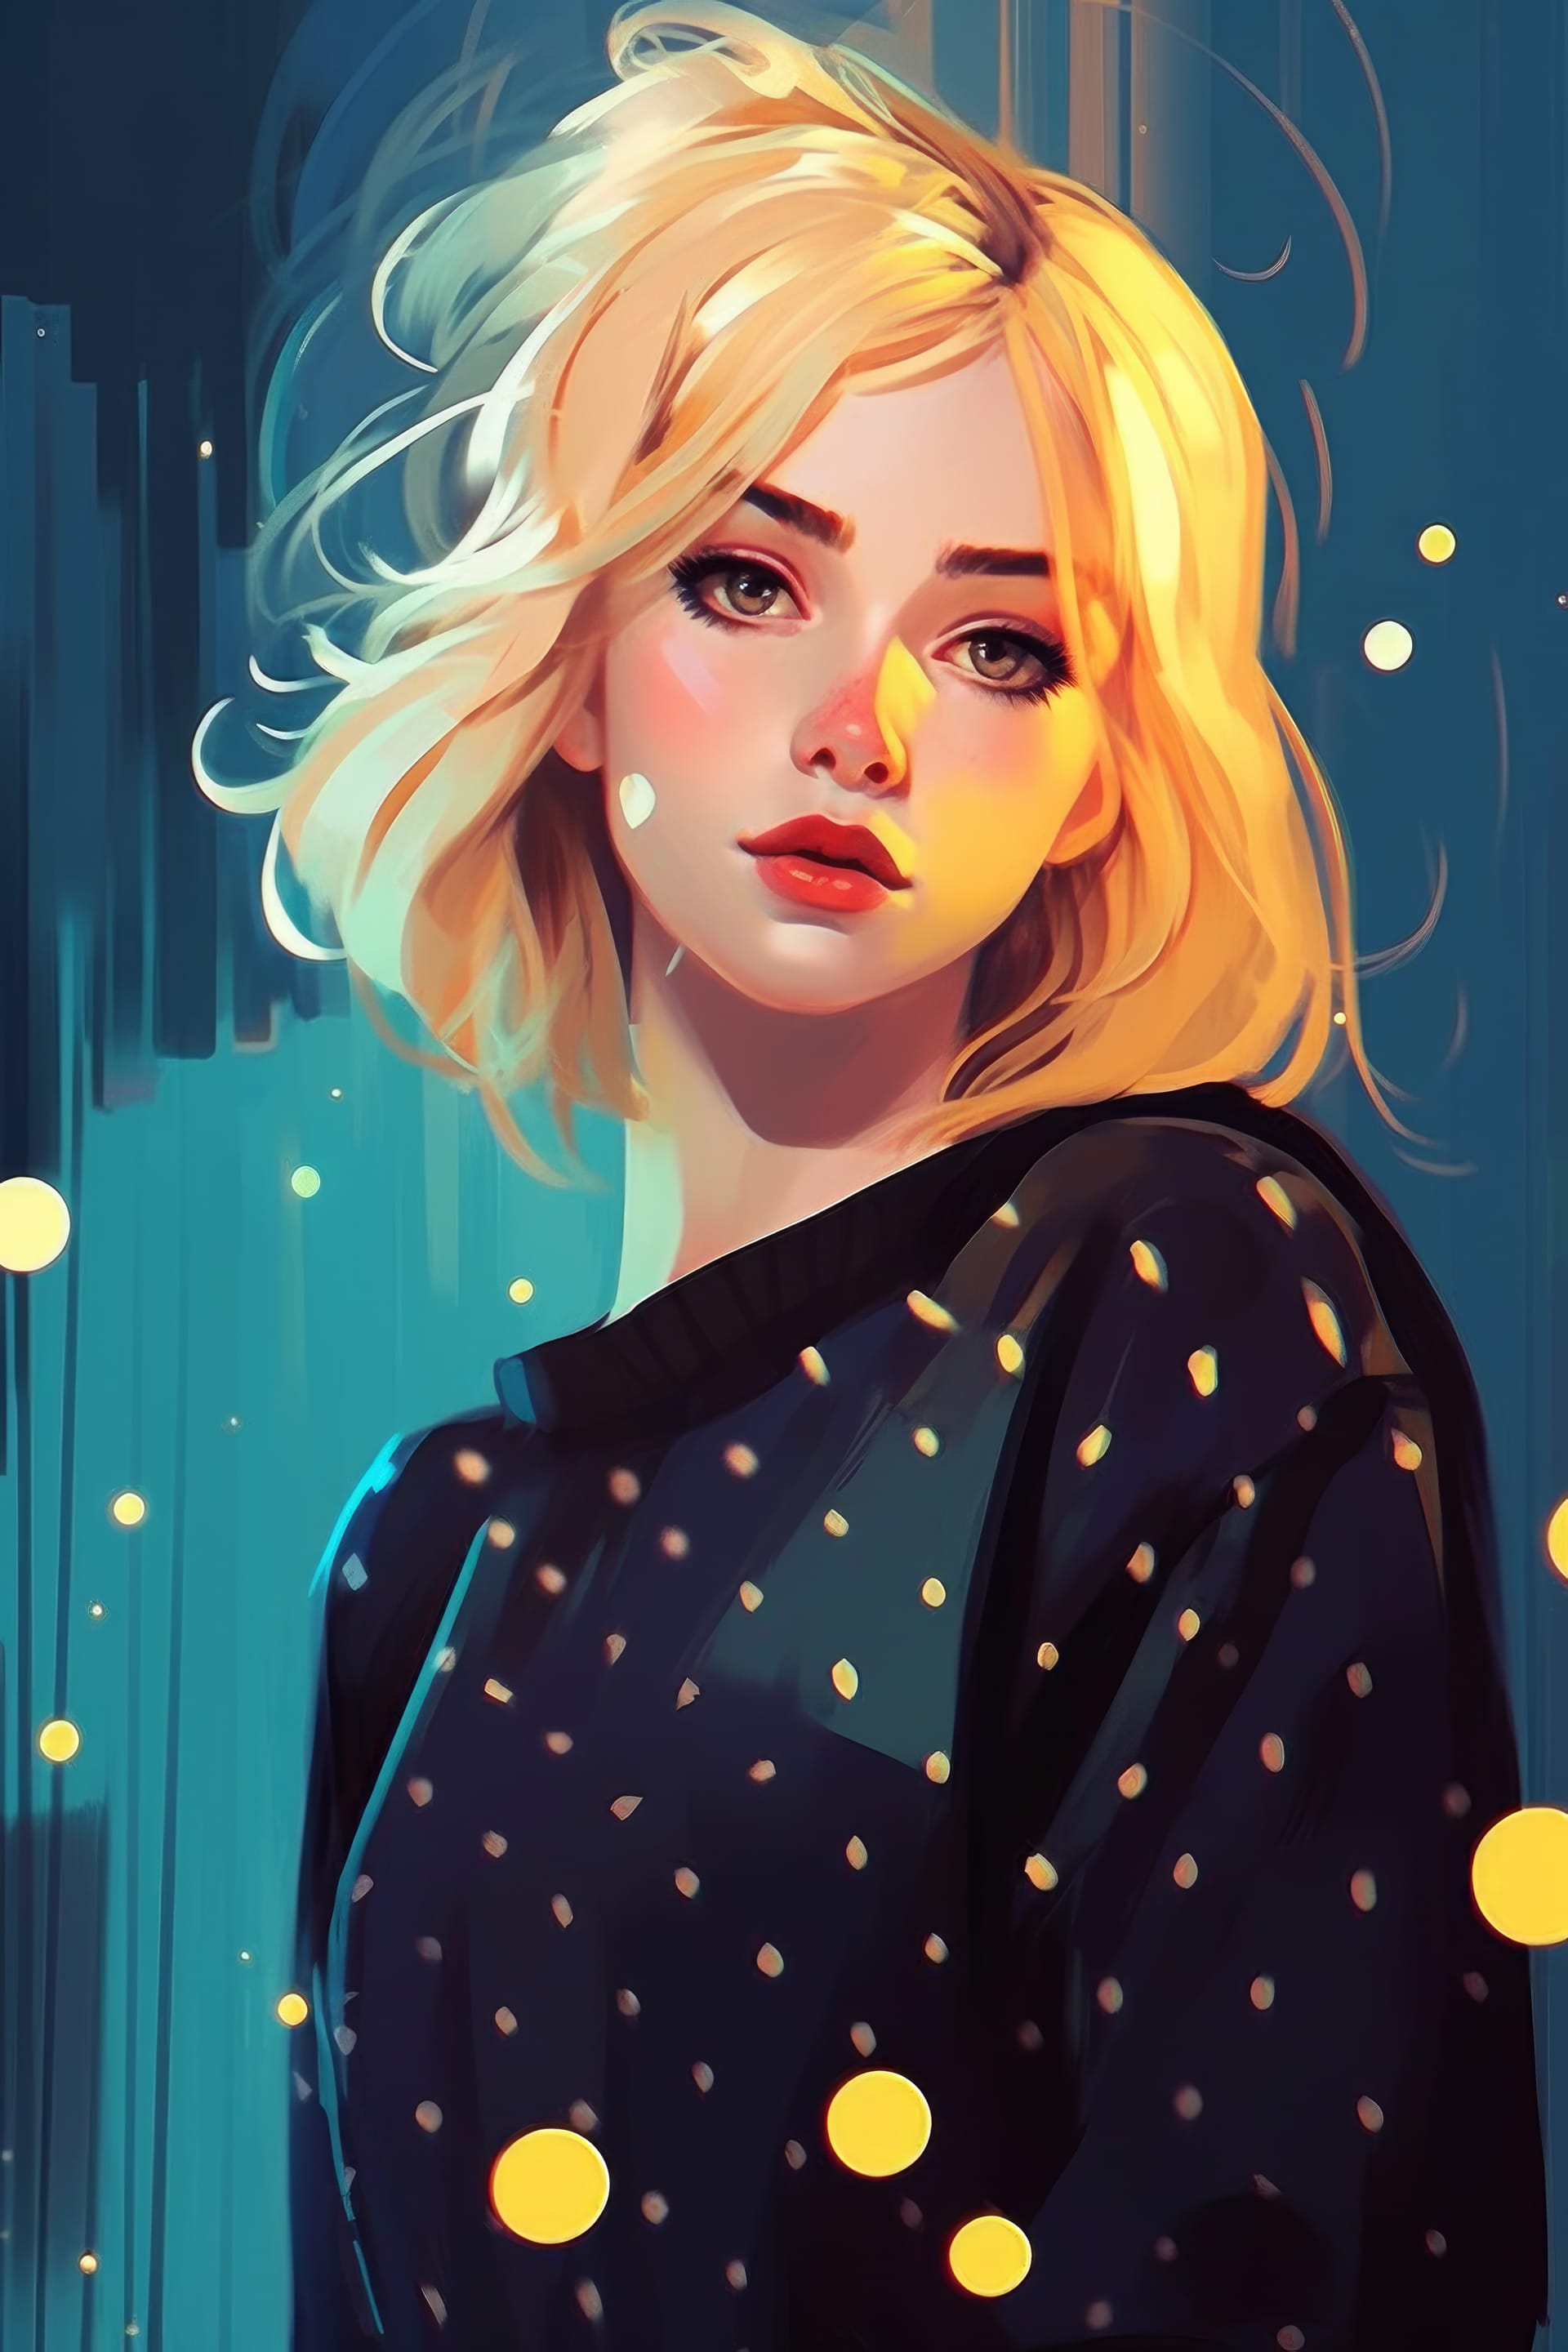 Excellent artwork woman with blonde hair black shirt